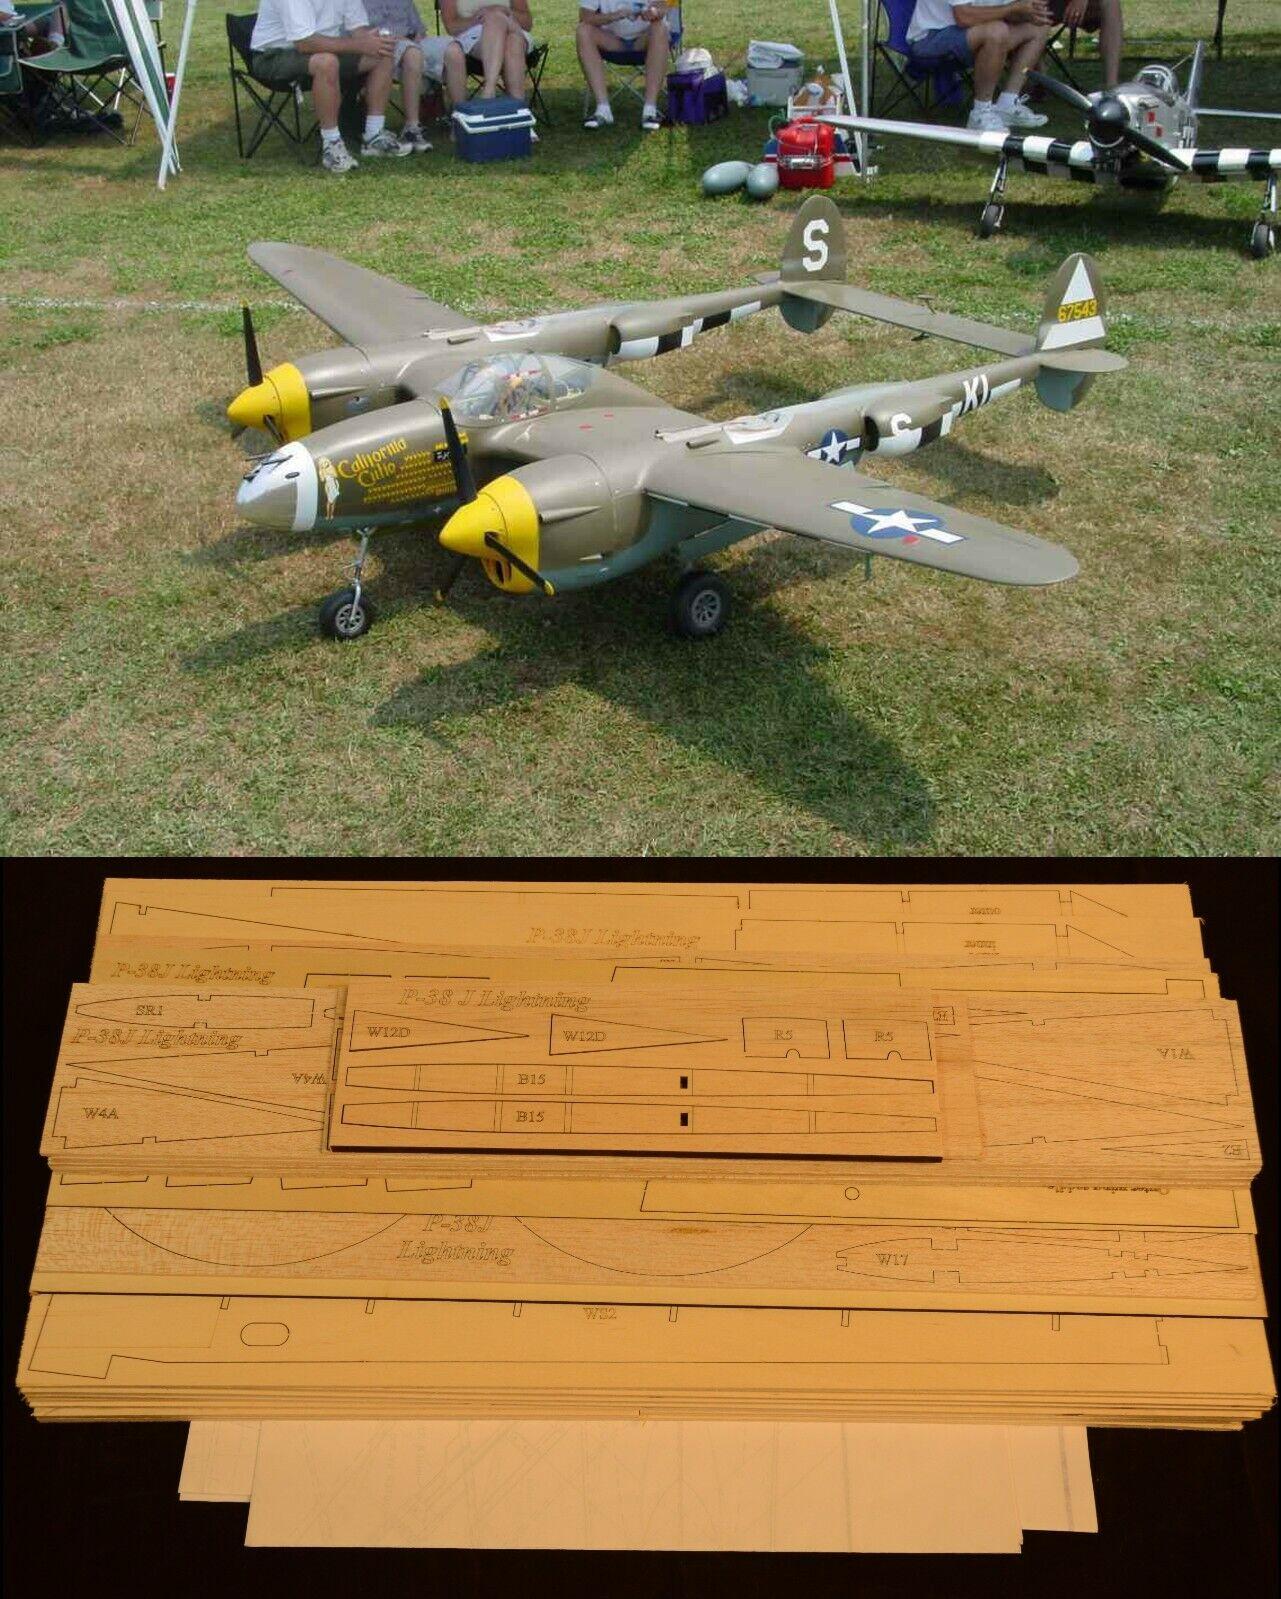 P 38 Lightning Rc Plane: P-38 Lightning: A Favorite Among RC Enthusiasts